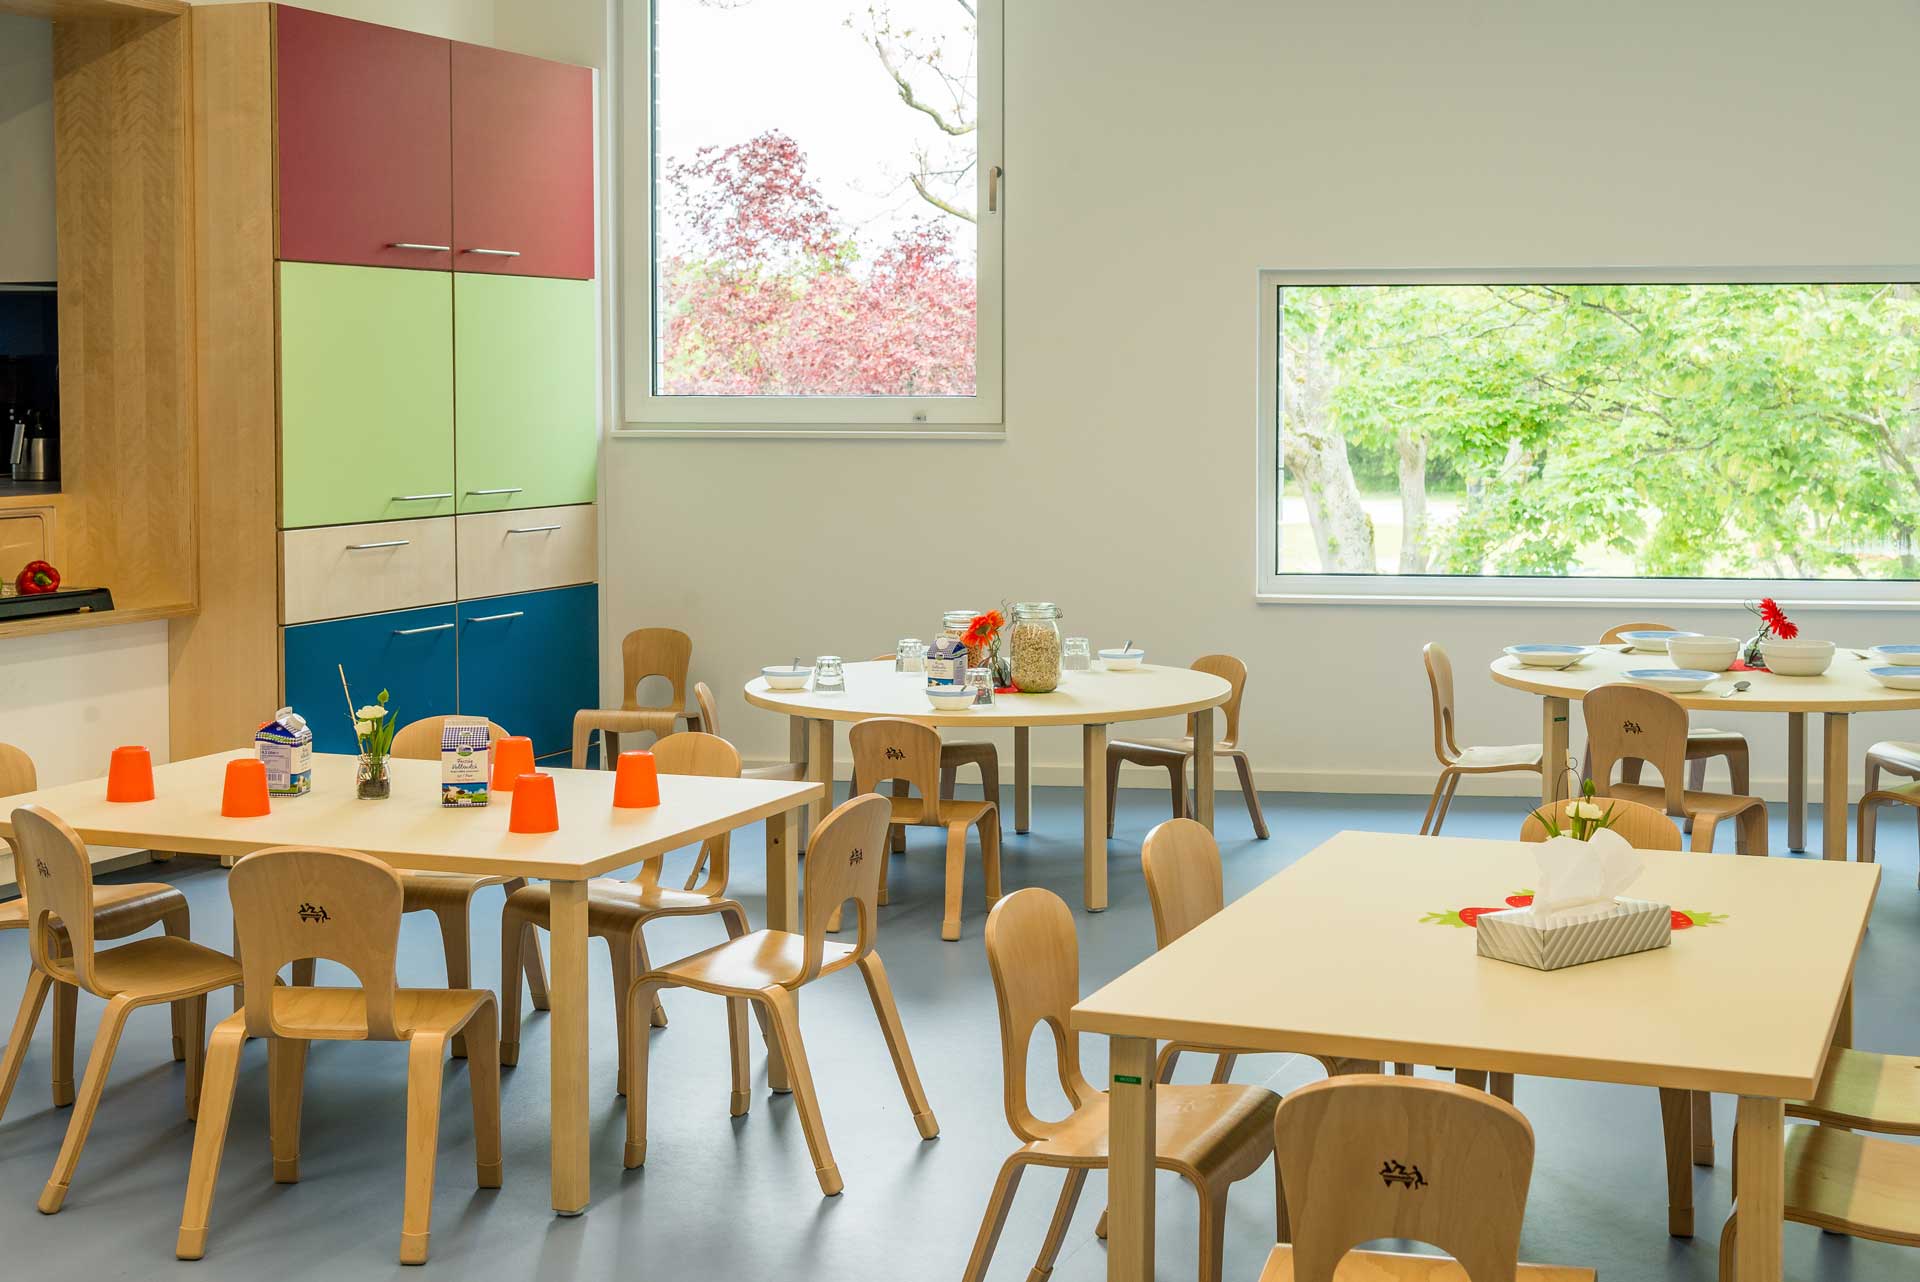 Nursery school - children's restaurant